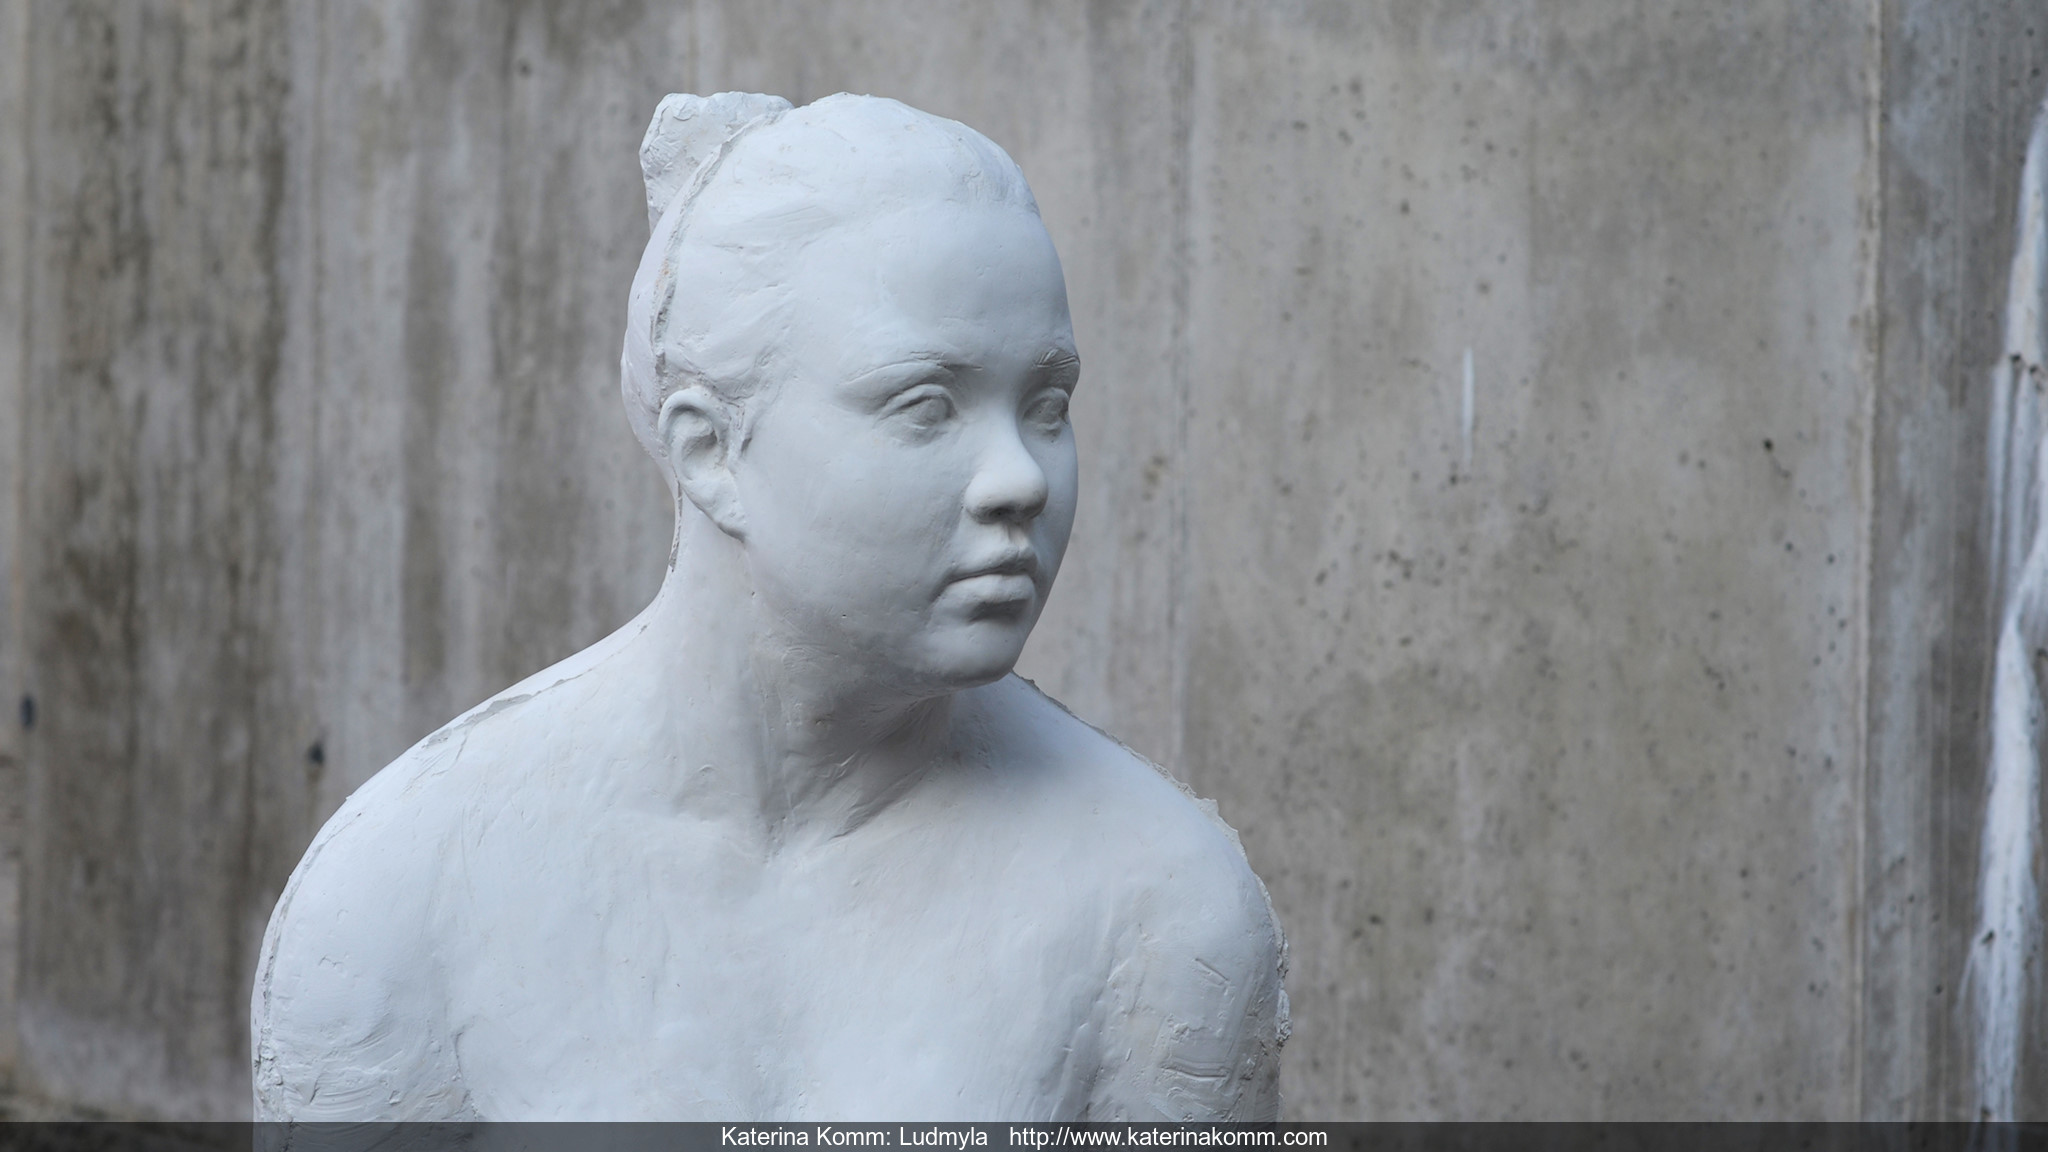 Katerina Komm, sculpture, STUDIES: Ludmyla